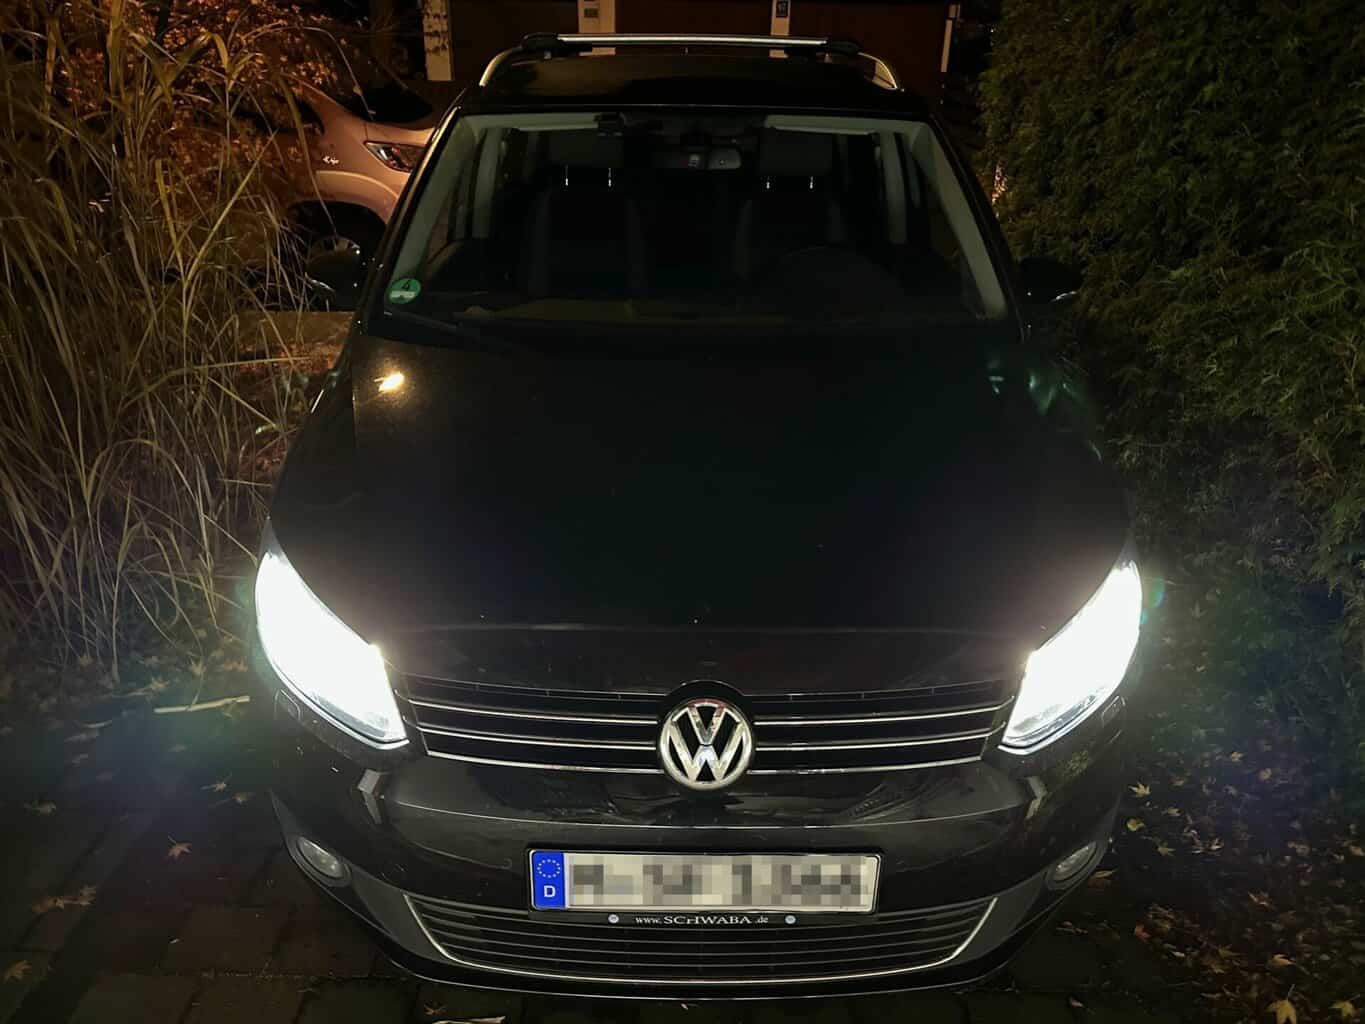 , Philips Ultinon Pro6000 W5W LED Standlicht im VW Touran